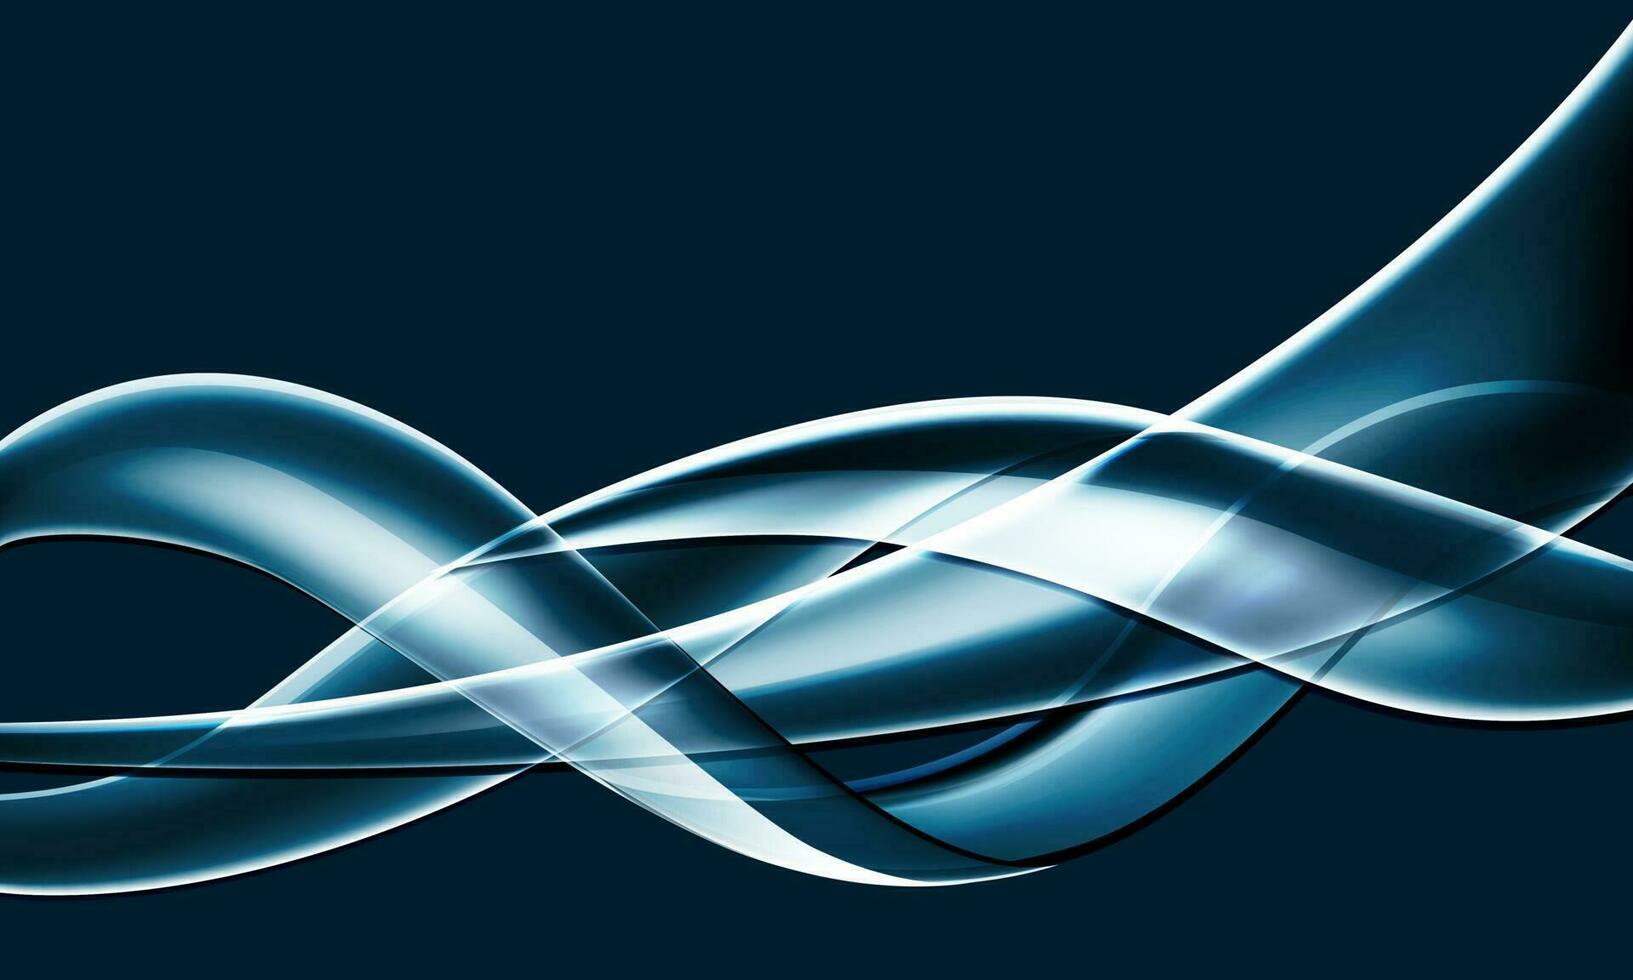 abstract blauw glas glanzend lijn spiraal kromme Golf beweging ontwerp modern luxe futuristische technologie creatief achtergrond vector